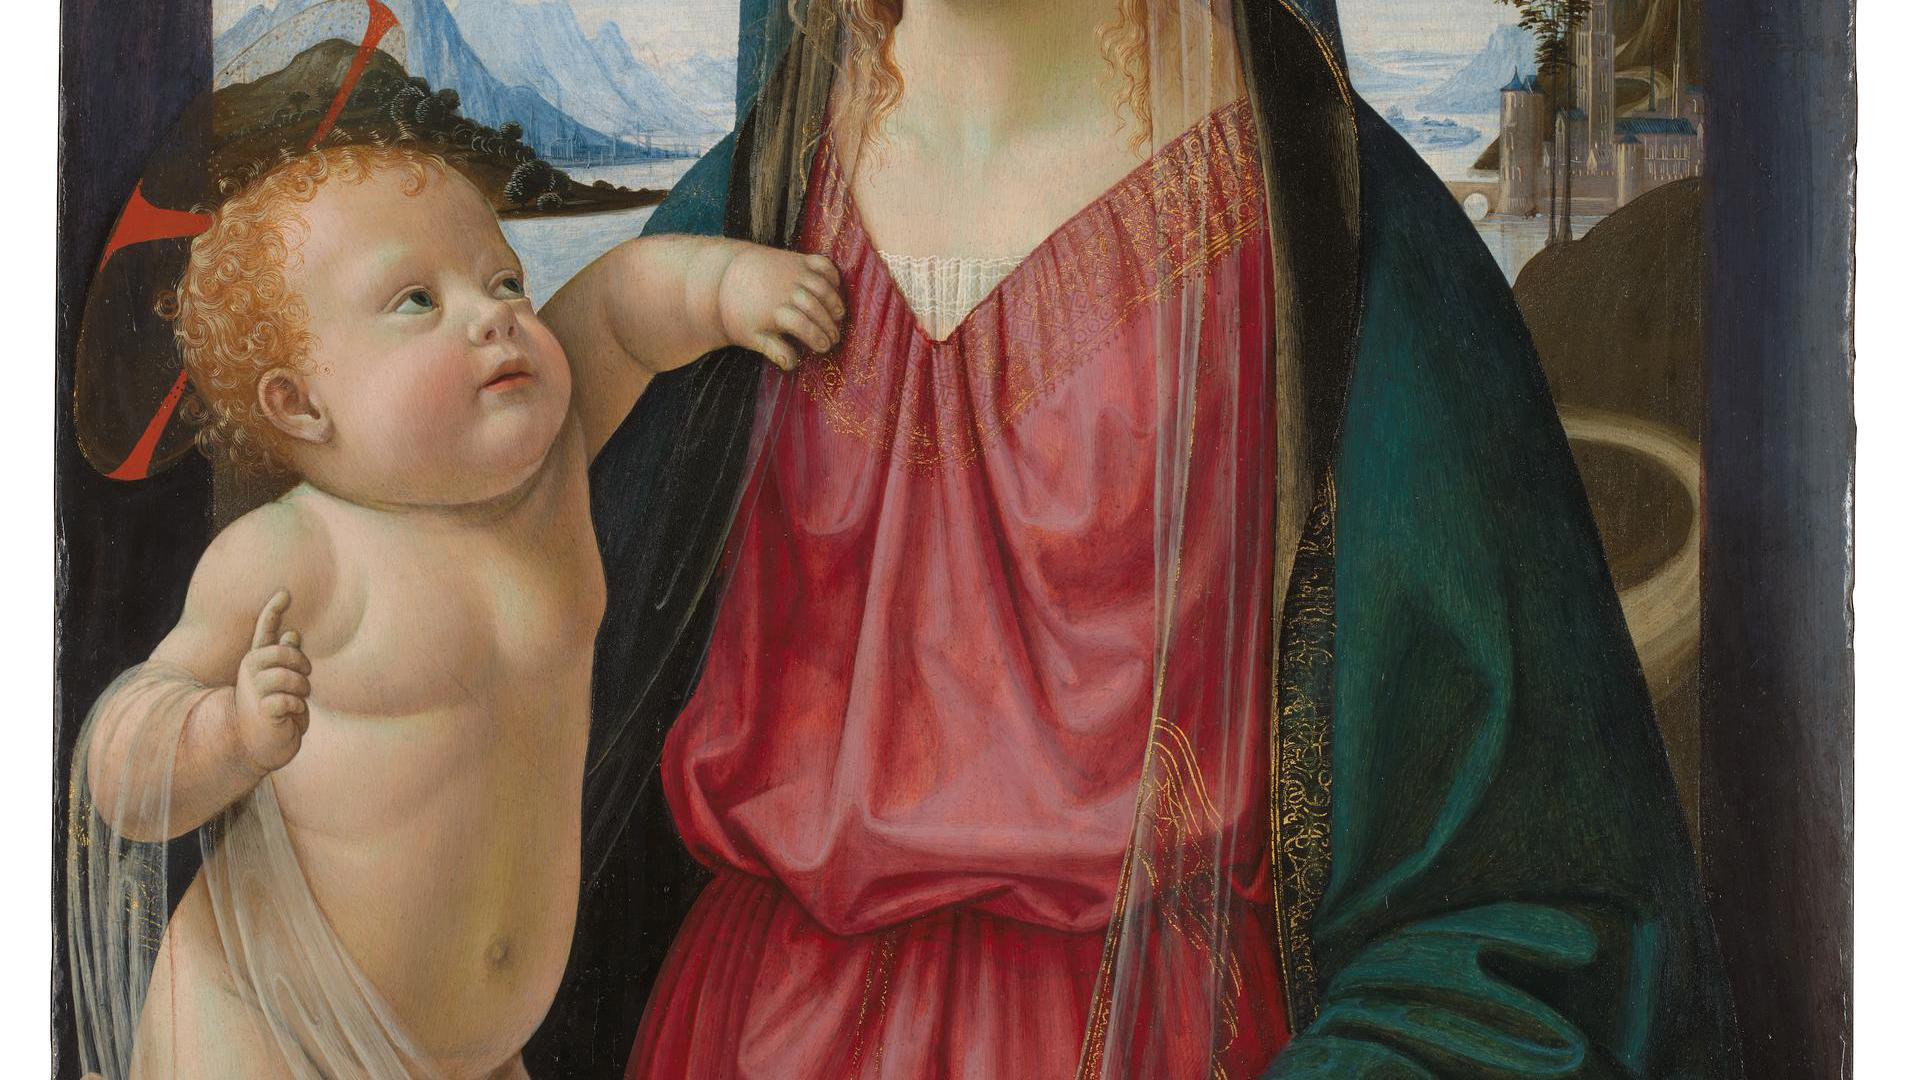 The Virgin and Child by Domenico Ghirlandaio